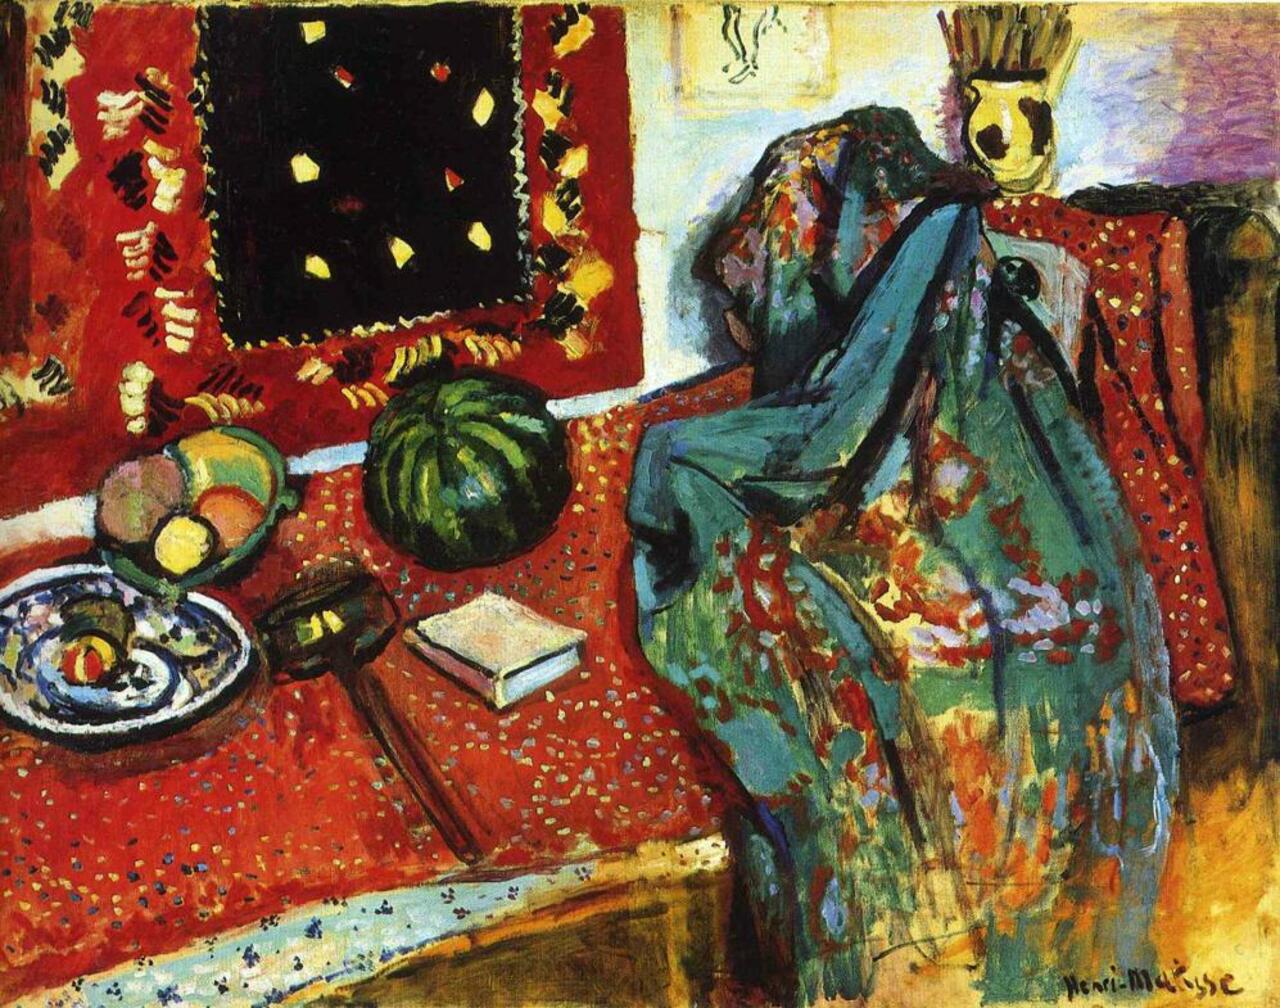 #painting #art #impressionism #Matisse #HenriMatisse http://t.co/8fkJ3x04lz